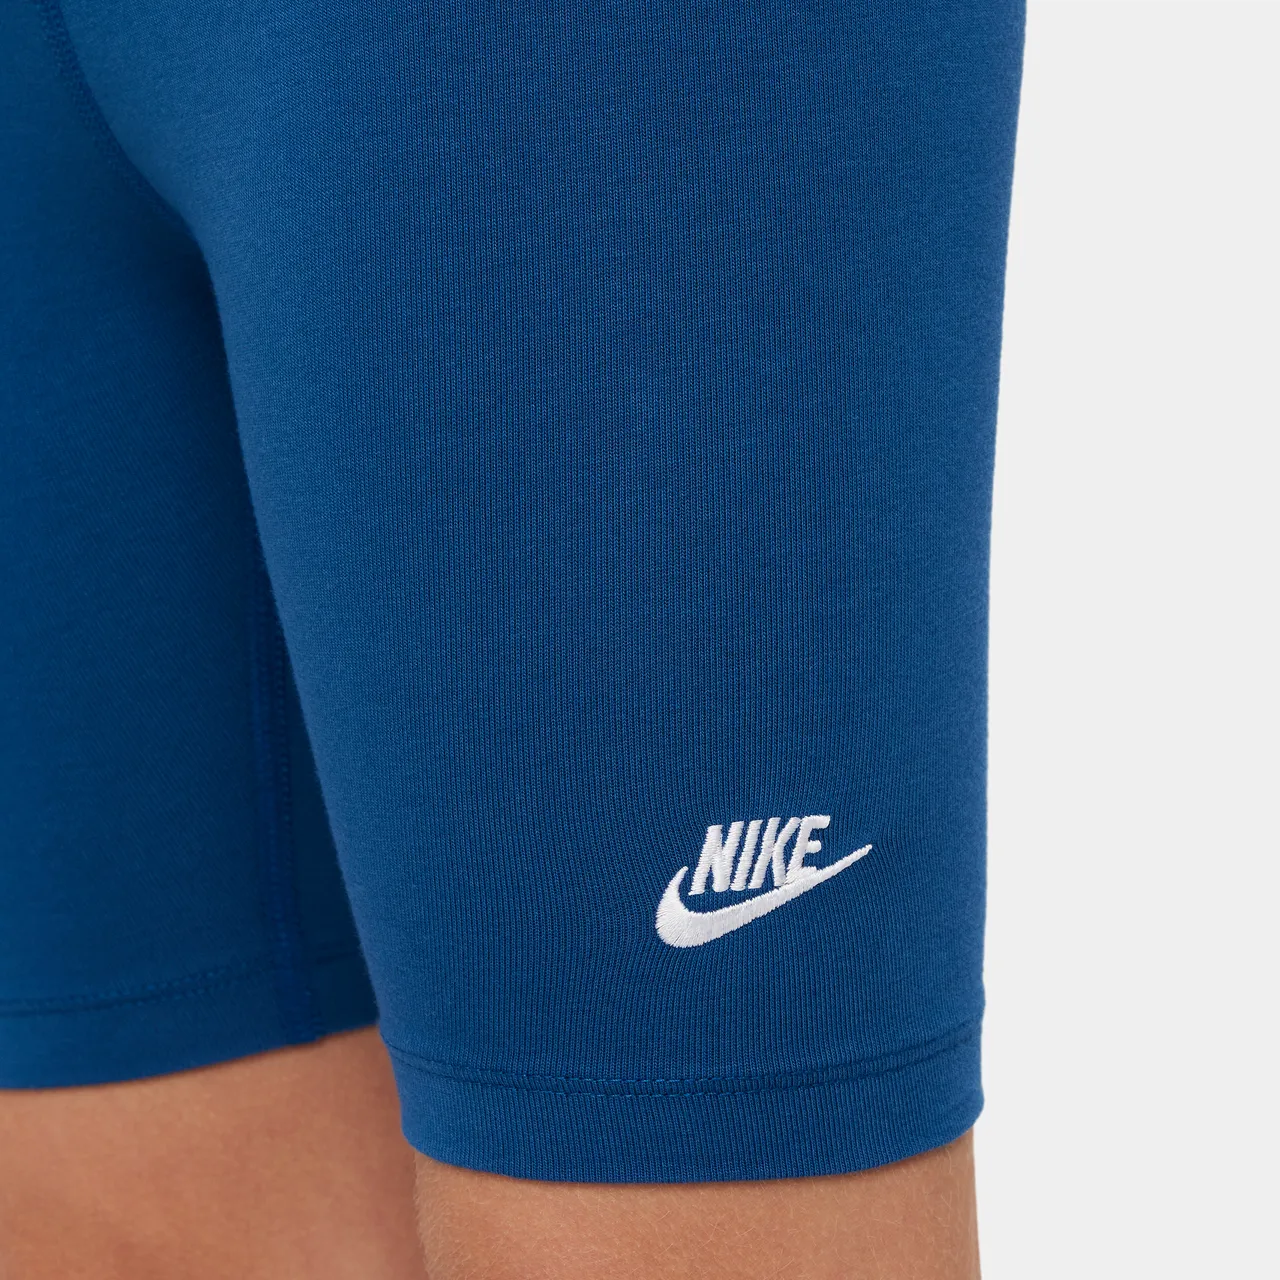 Nike Older Kids' (Girls') 18cm (approx.) Biker Shorts - Blue - Polyester